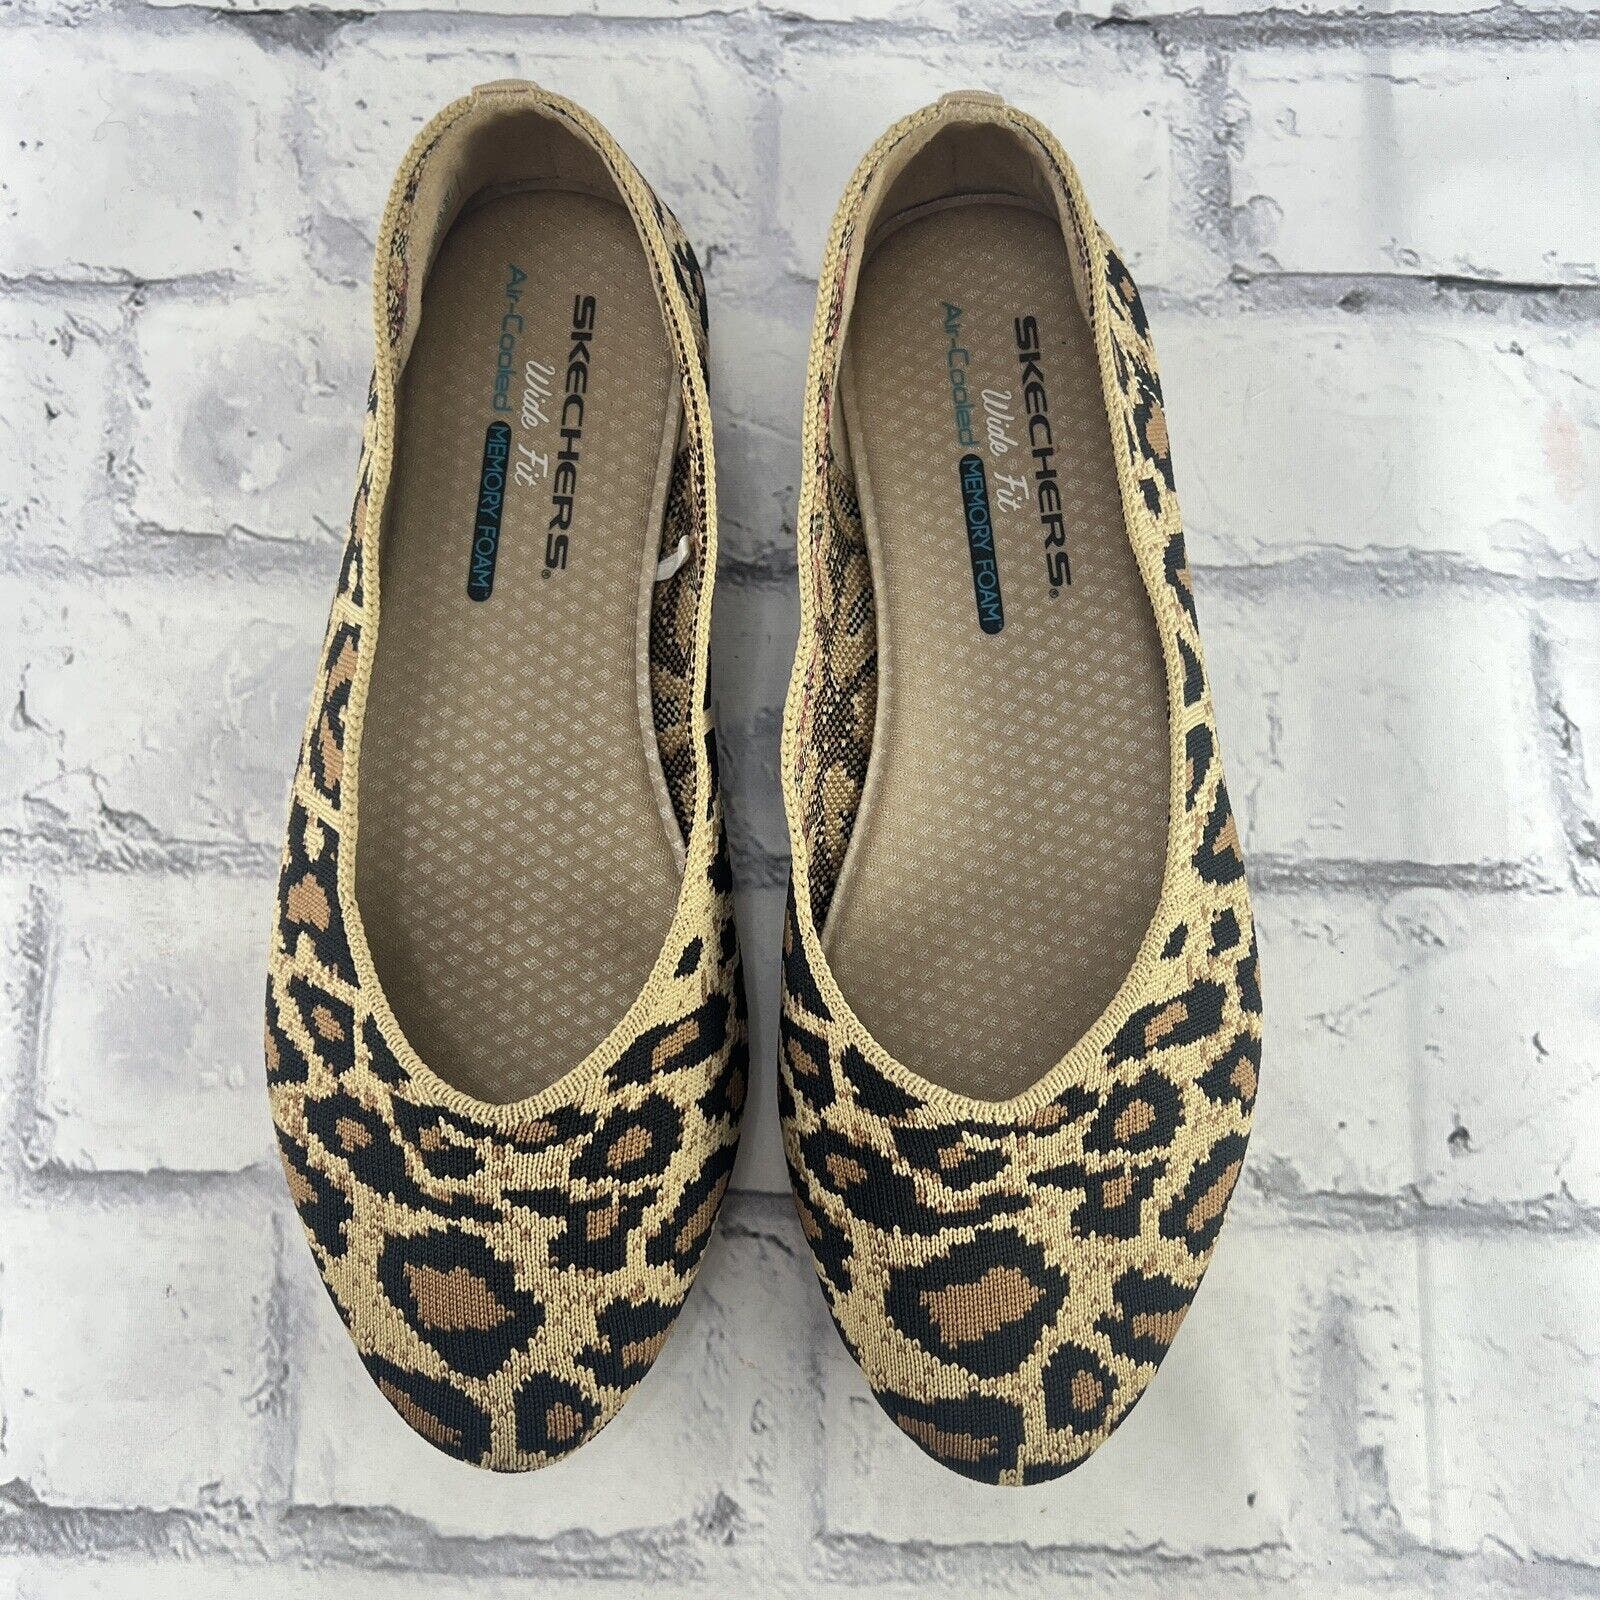 Skechers Cleo Claw-Some Ballet Flats Women’s 8 Wide Slip-On Casual Leopard Tan